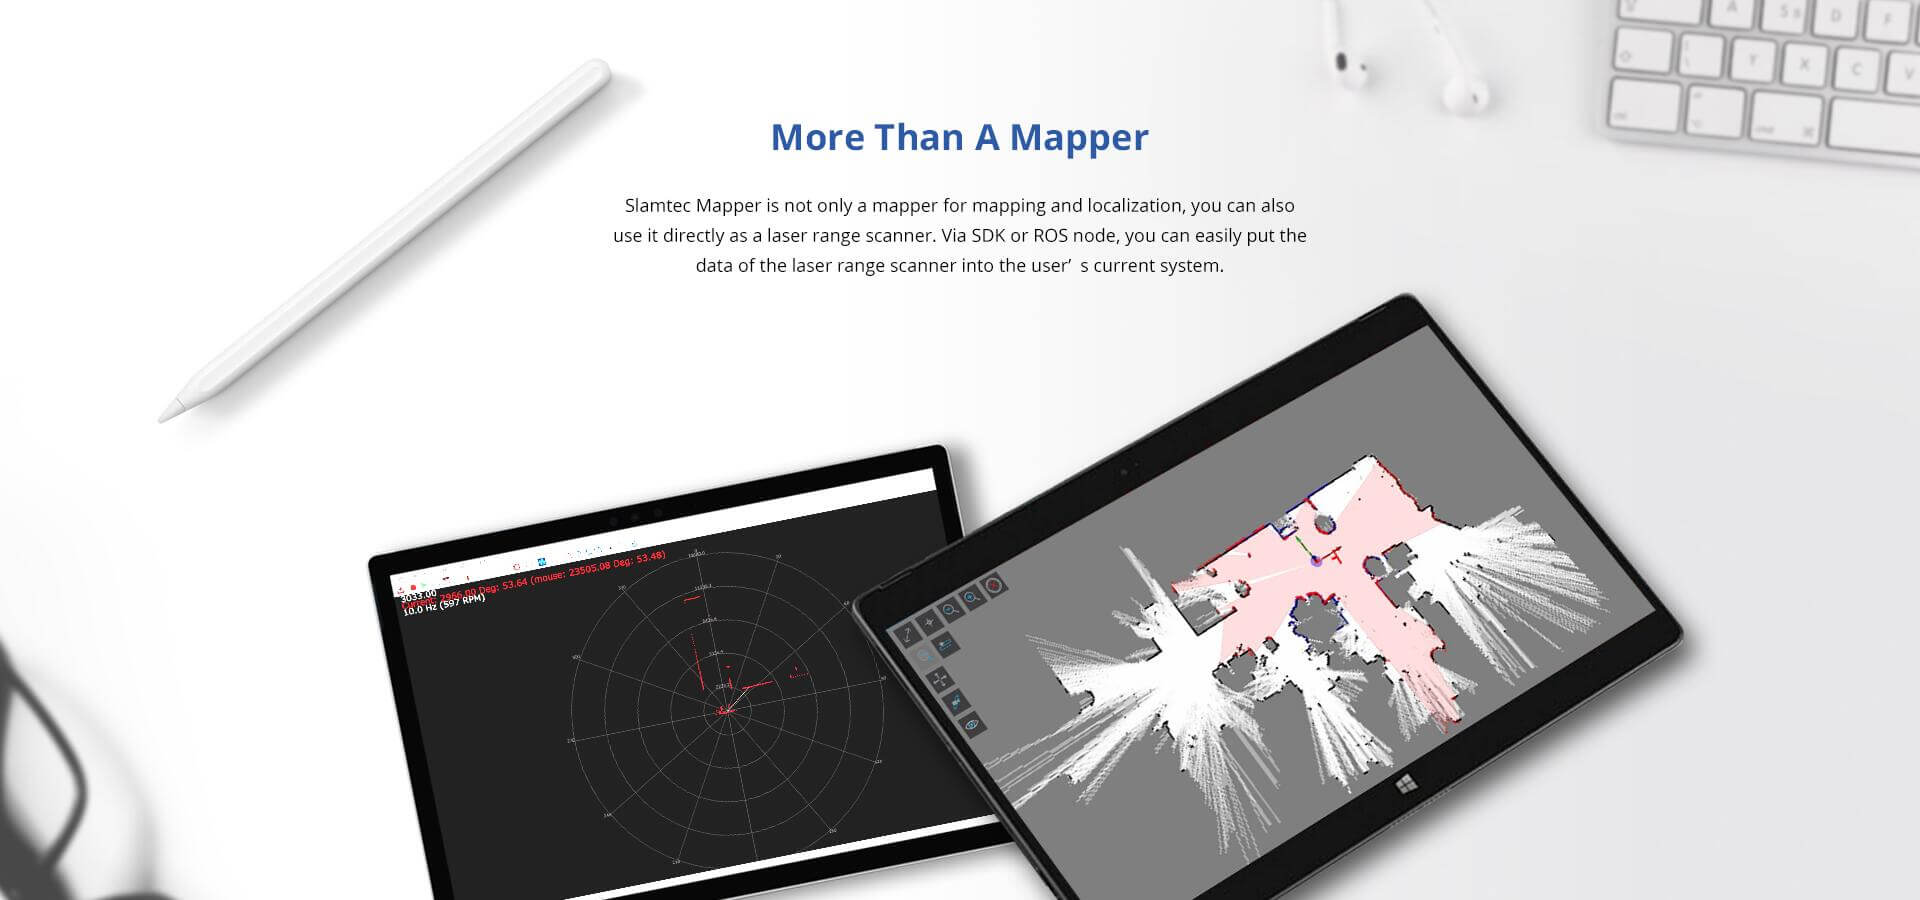 SLAMTEC MAPPER M1M1-360ط¢آ°Laser Mapping Sensor TOF 20m